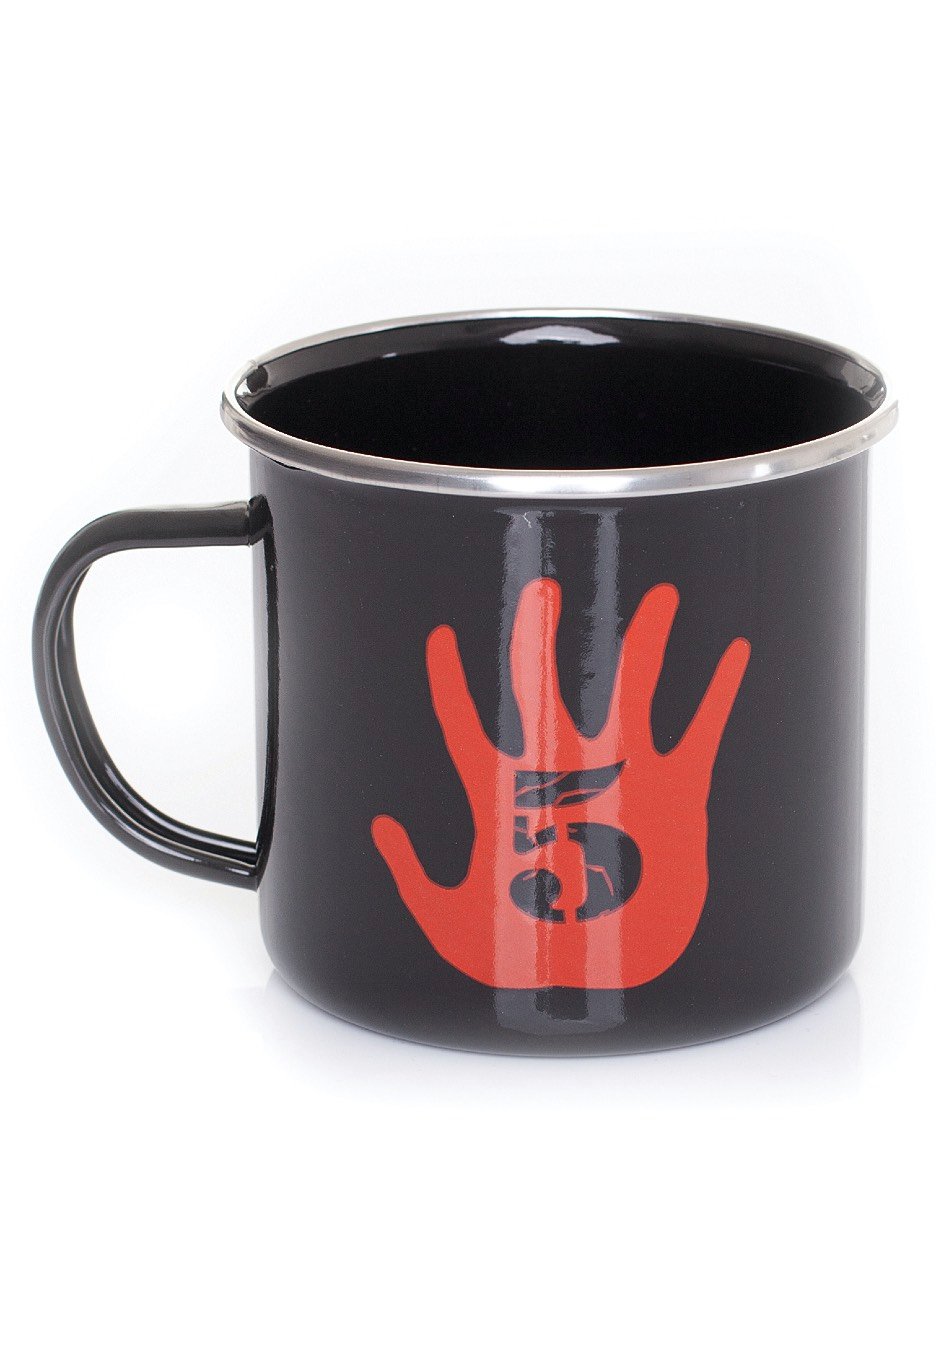 Five Finger Death Punch - Knuckle And Hand - Mug